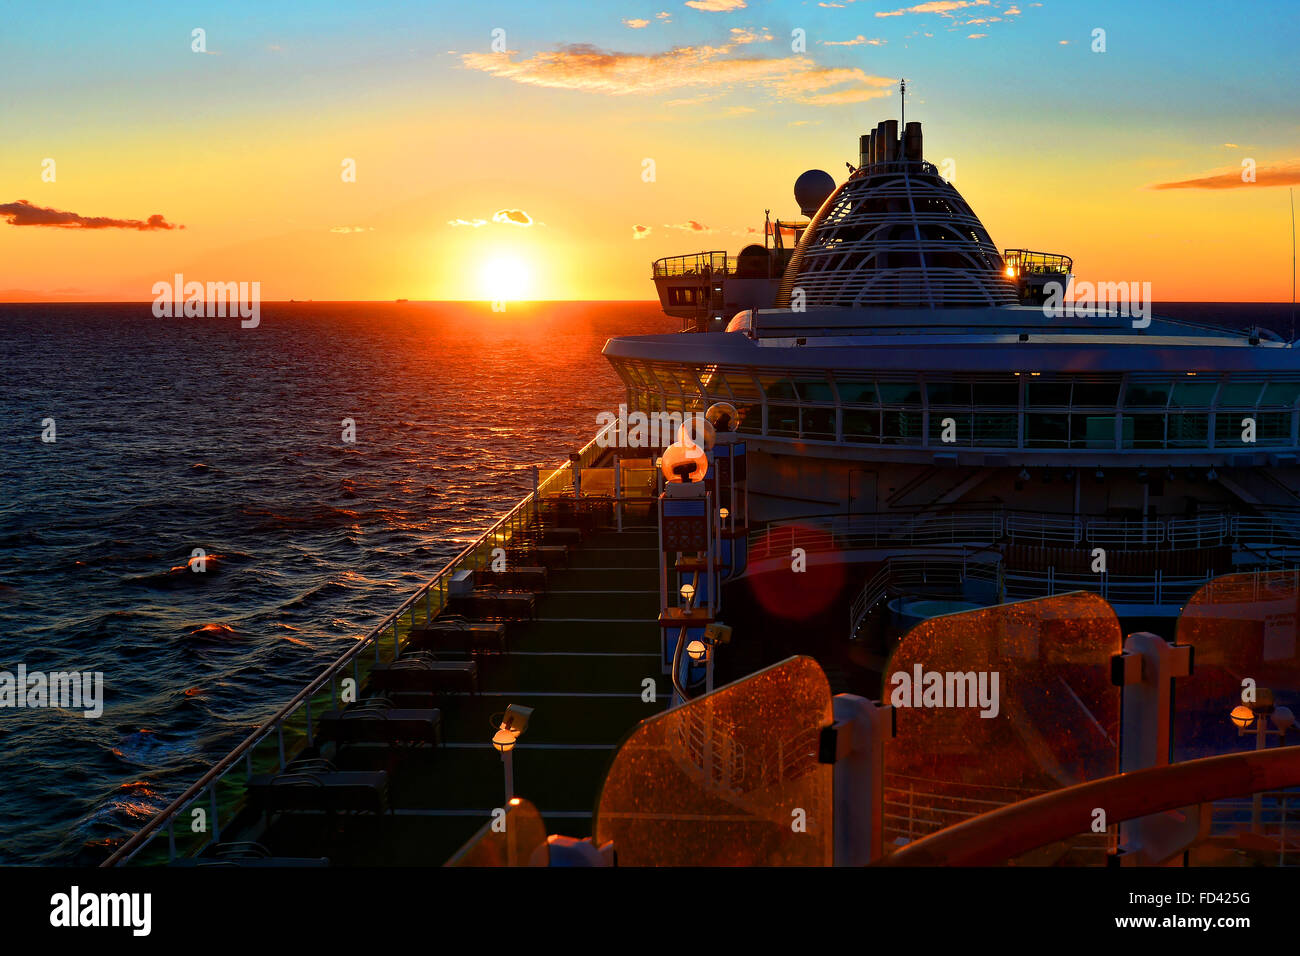 P&O cruise ship Ventura sunset at sea blue red sky Stock Photo